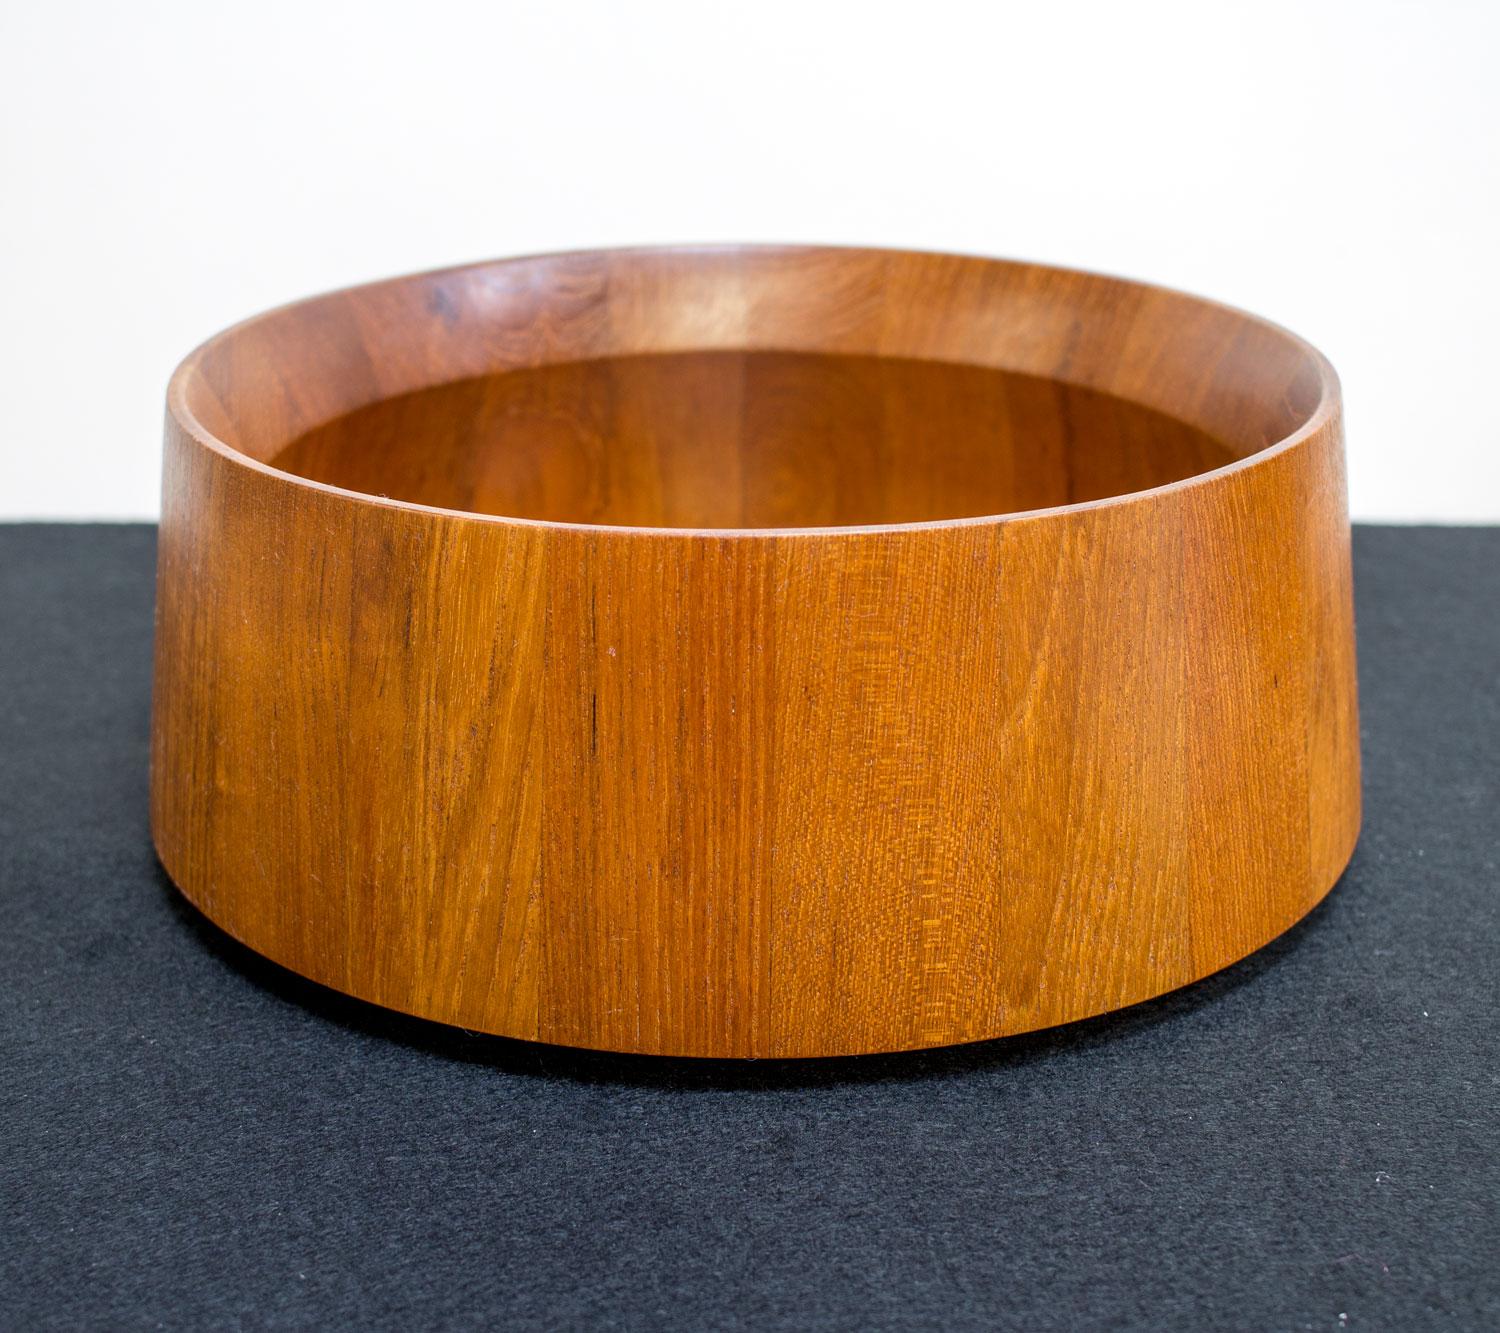 Round teak bowl designed by Jens Quistgaard, a Danish sculptor and industrial designer, for Dansk Designs in the late 1950s.